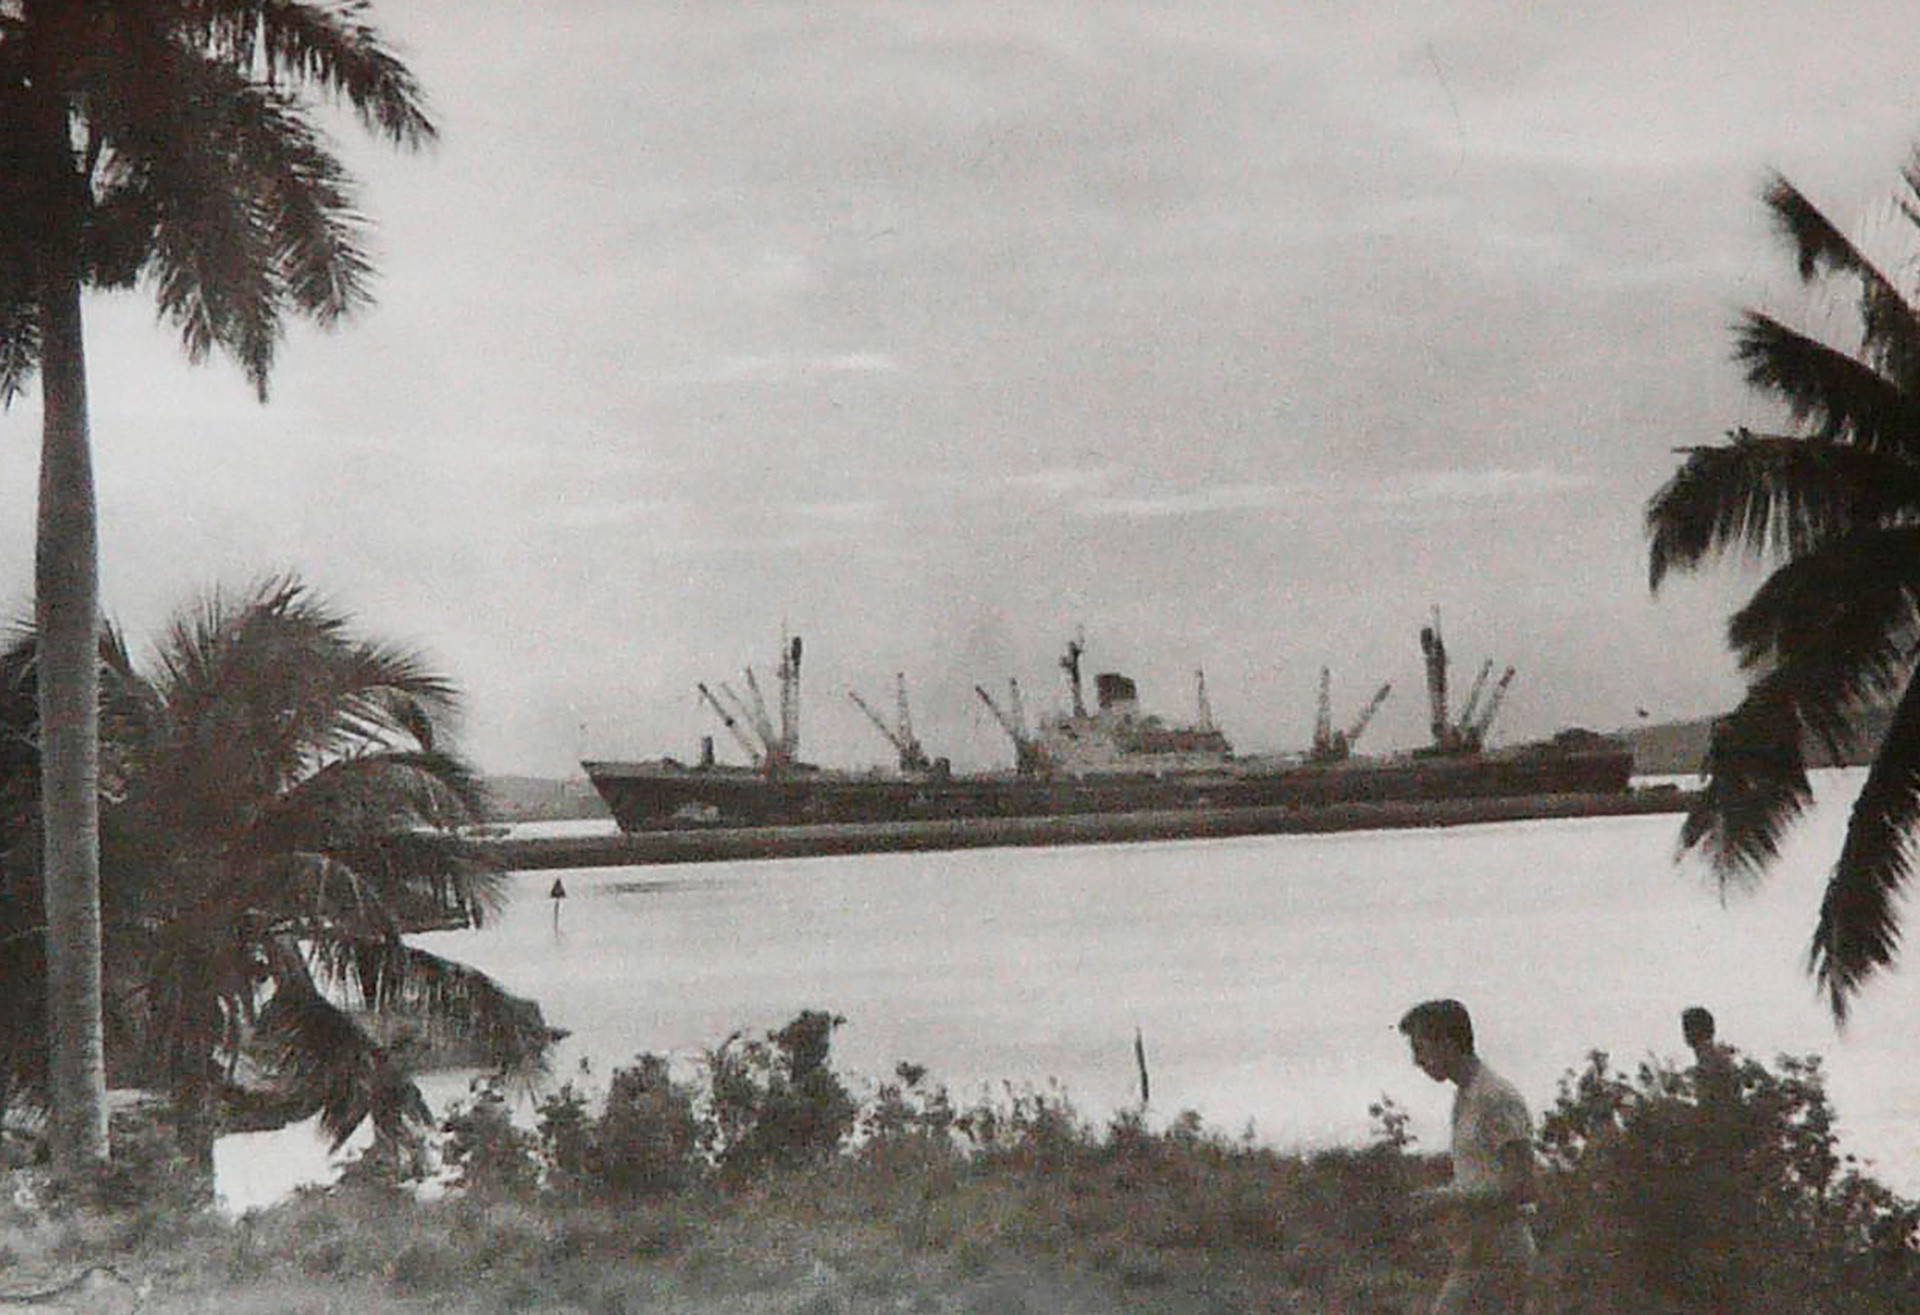 Carguero soviético en Cuba.